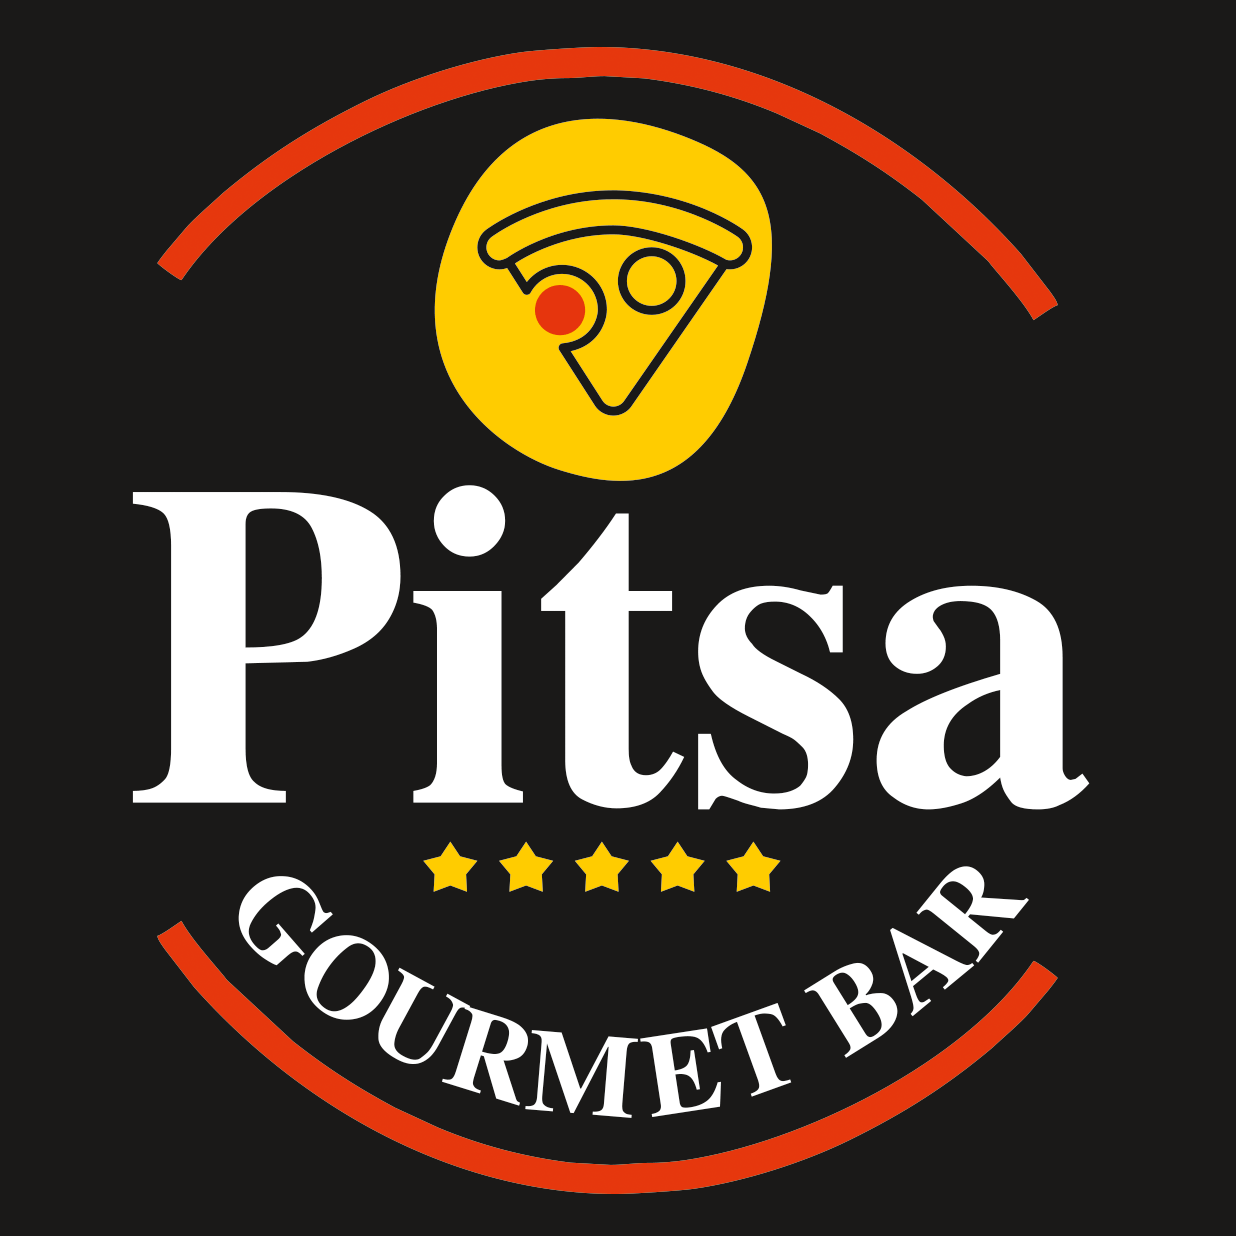 Pitsa Gourmet Bar - Pizza & Pasta